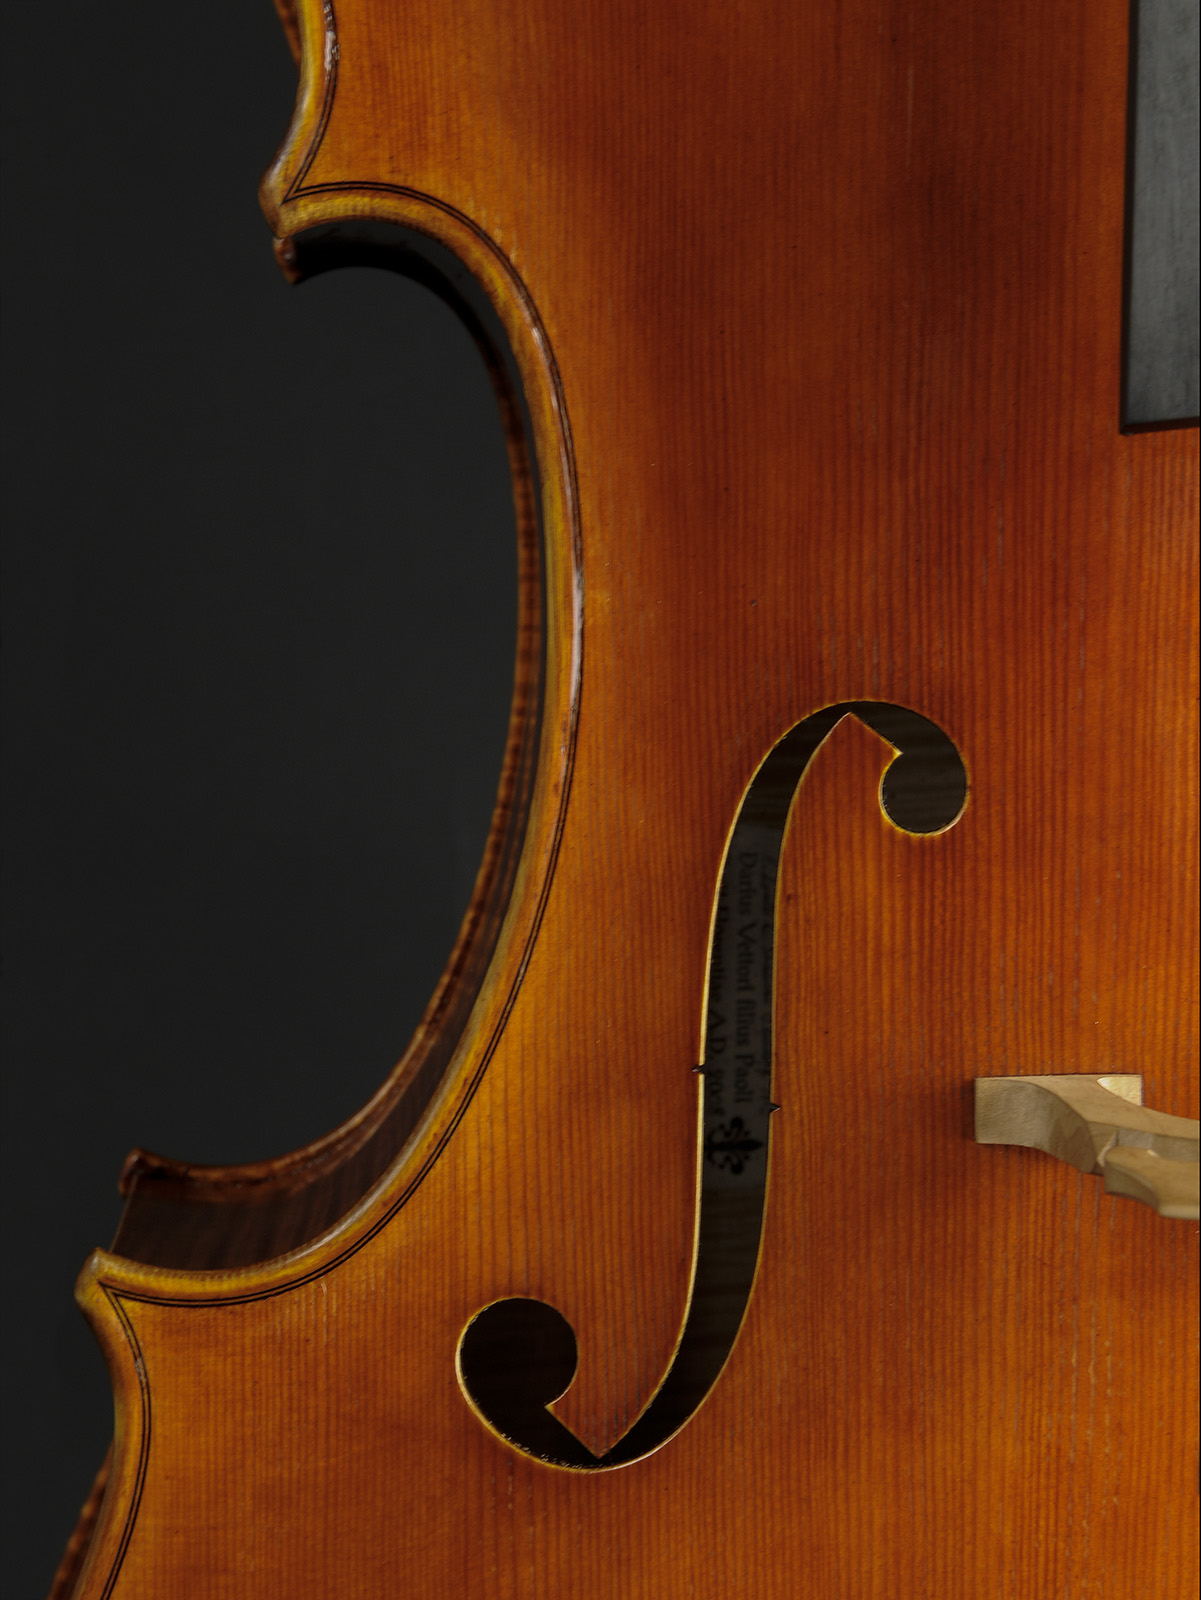 Antonio Stradivari Cremona 1712 “Davidoff“ - Image 5